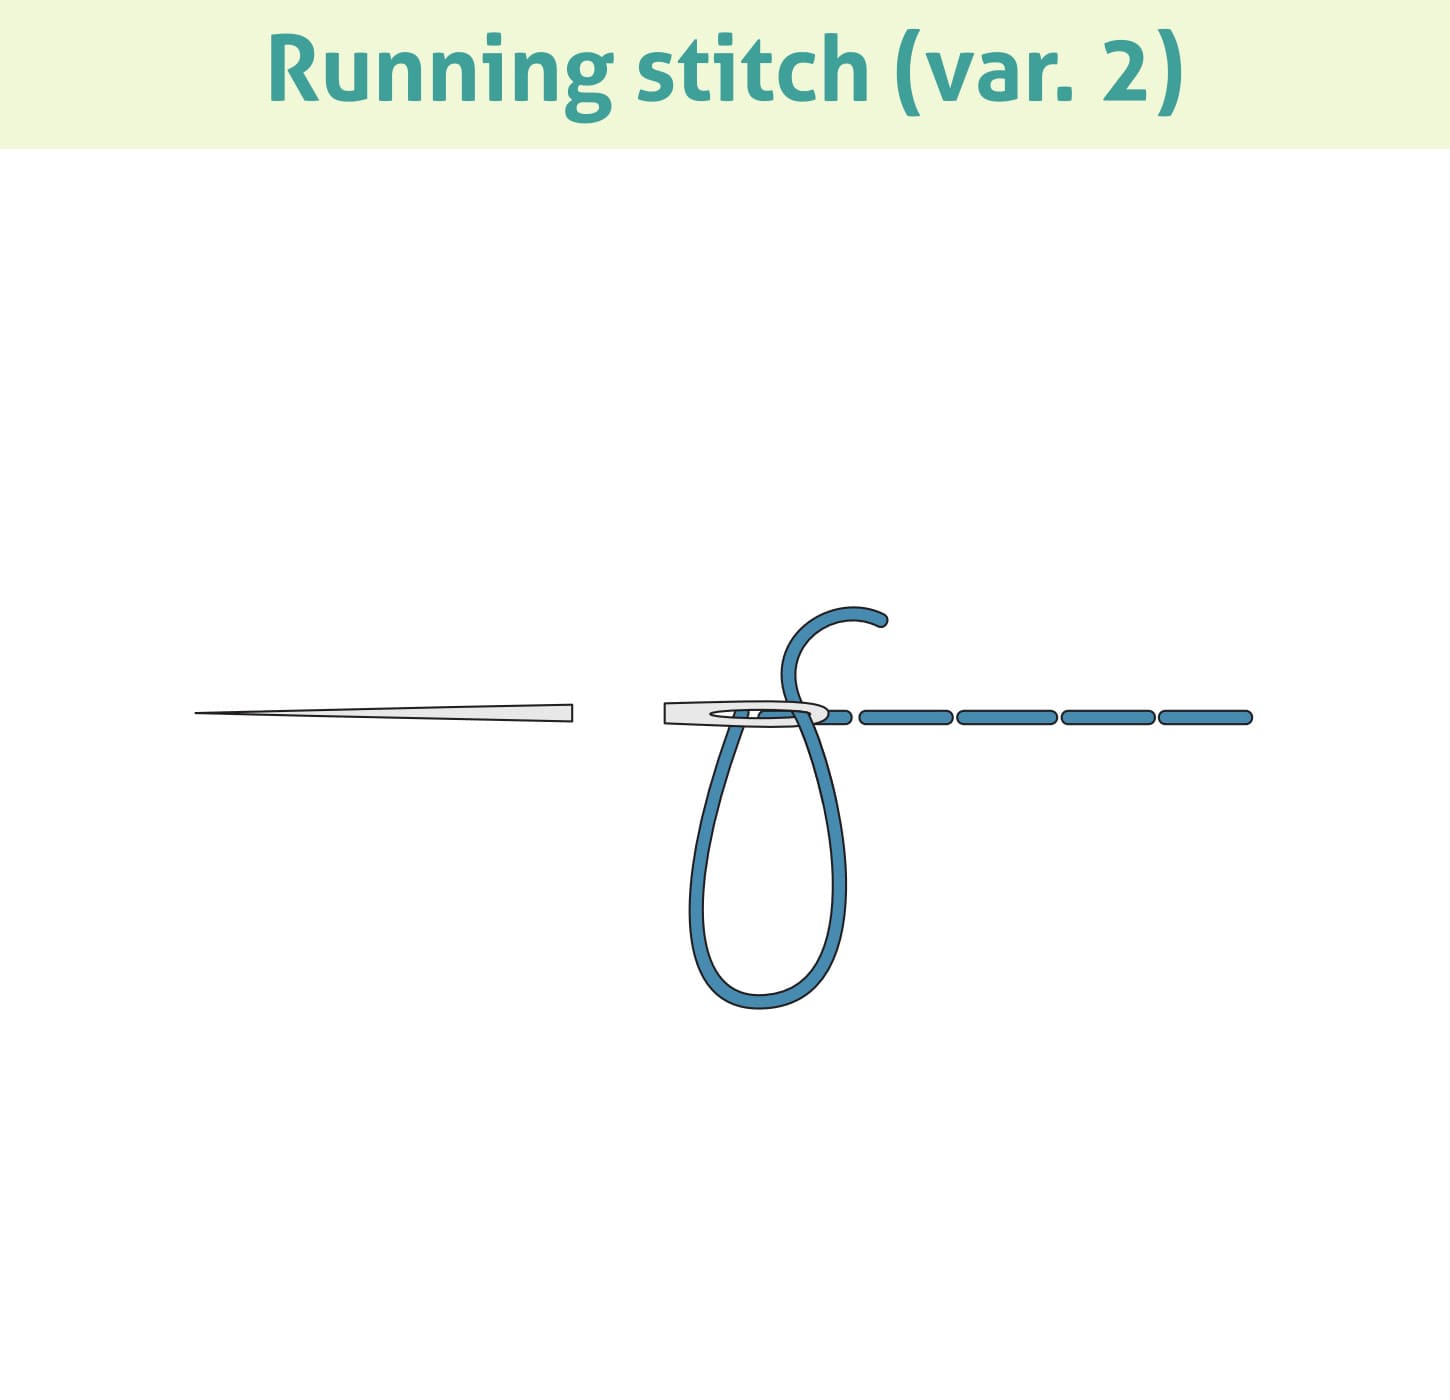 Running stitch (var. 2)  Embroidery Stitches